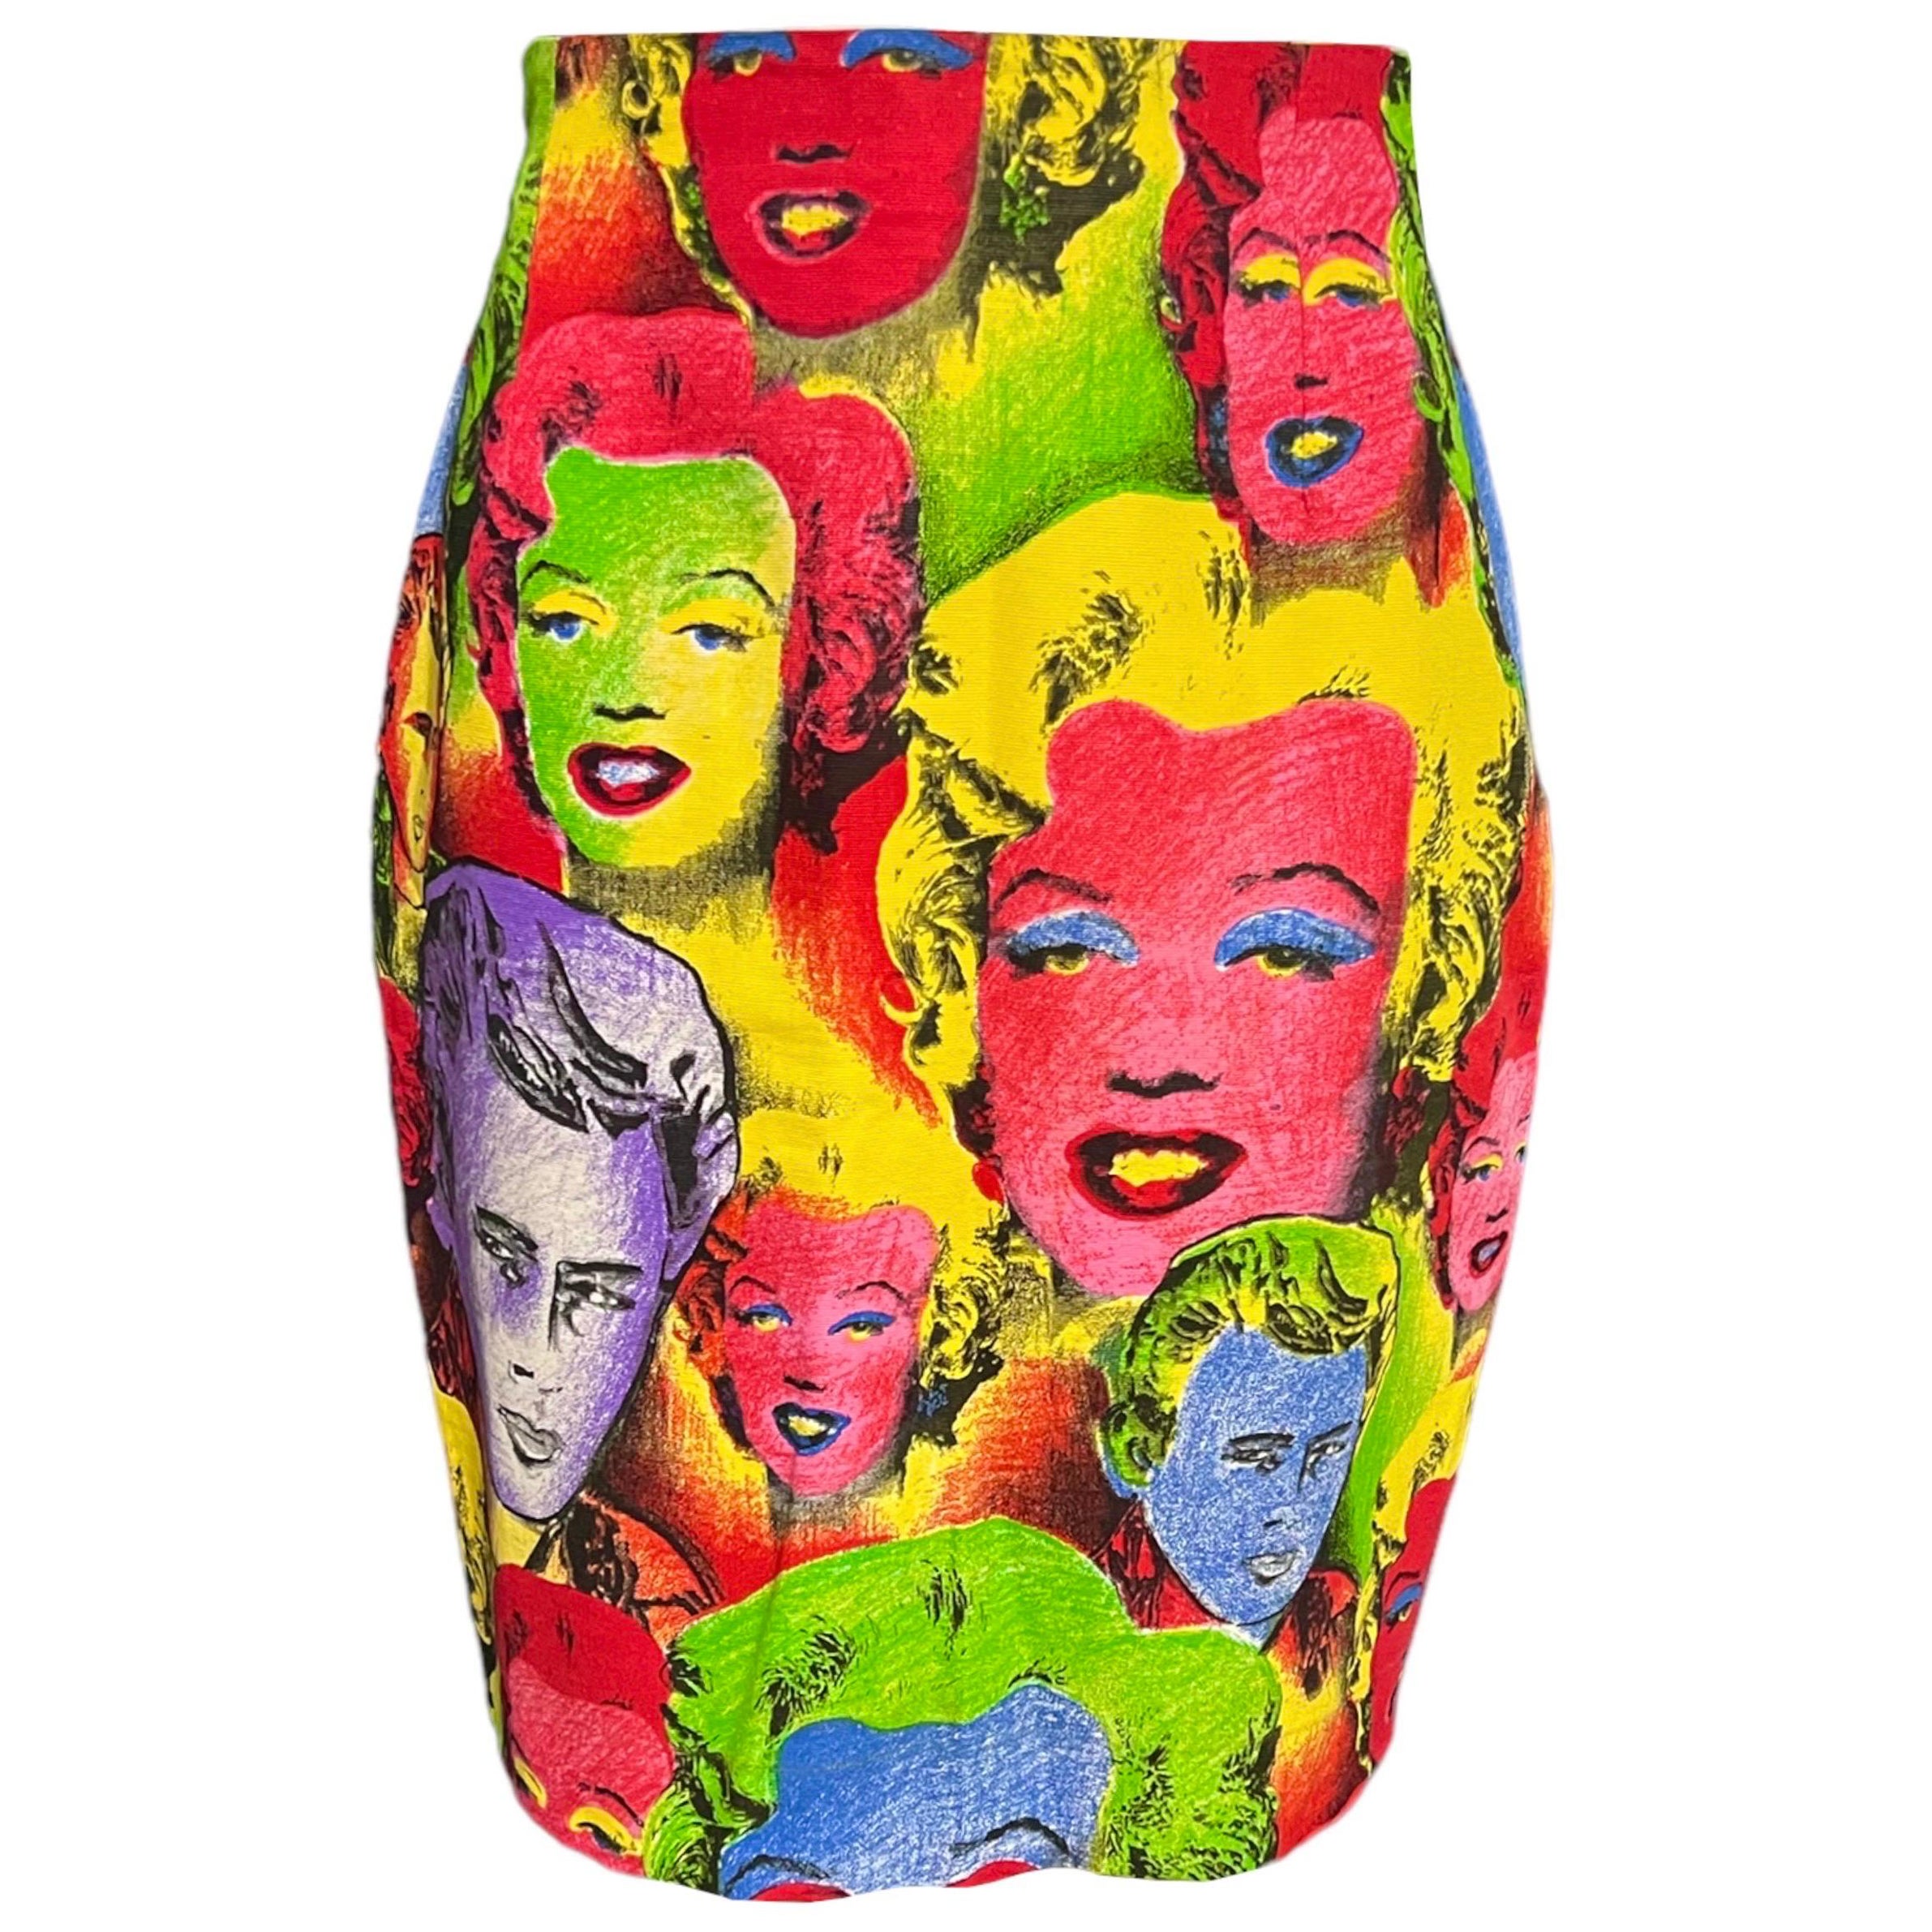 S/S 1991 Gianni Versace Marilyn Monroe James Dean Warhol Printed Skirt For Sale